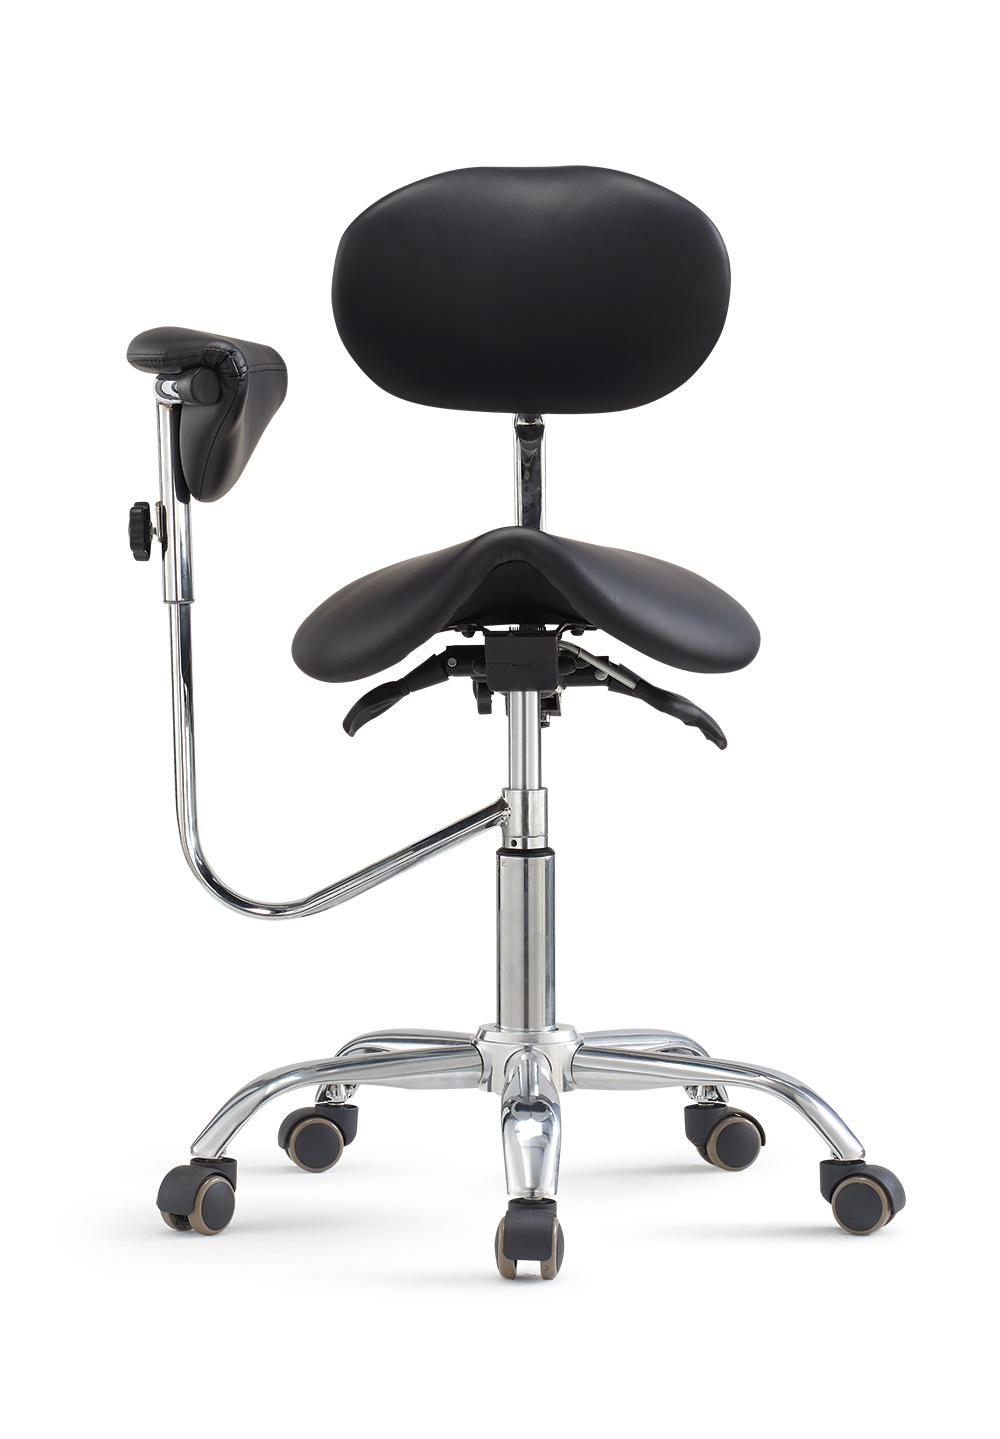 Split Seat Saddle Stool Medical Deatl Assistant Chair with Swivel Armrest